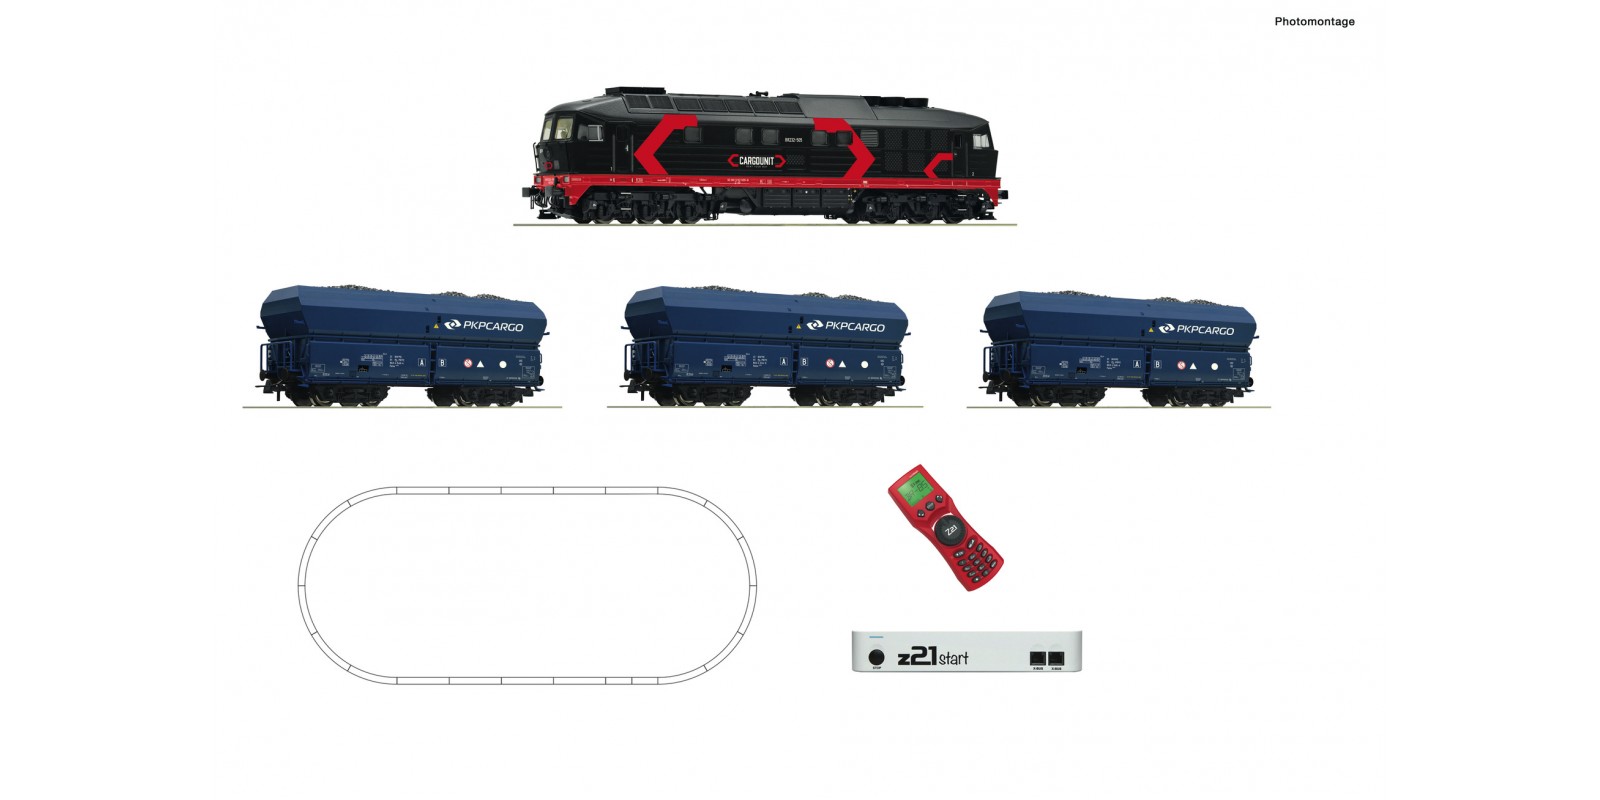 RO51342 z21 start digital set: Diesel locomotive class 232 and goods train, Cargounit/PKP